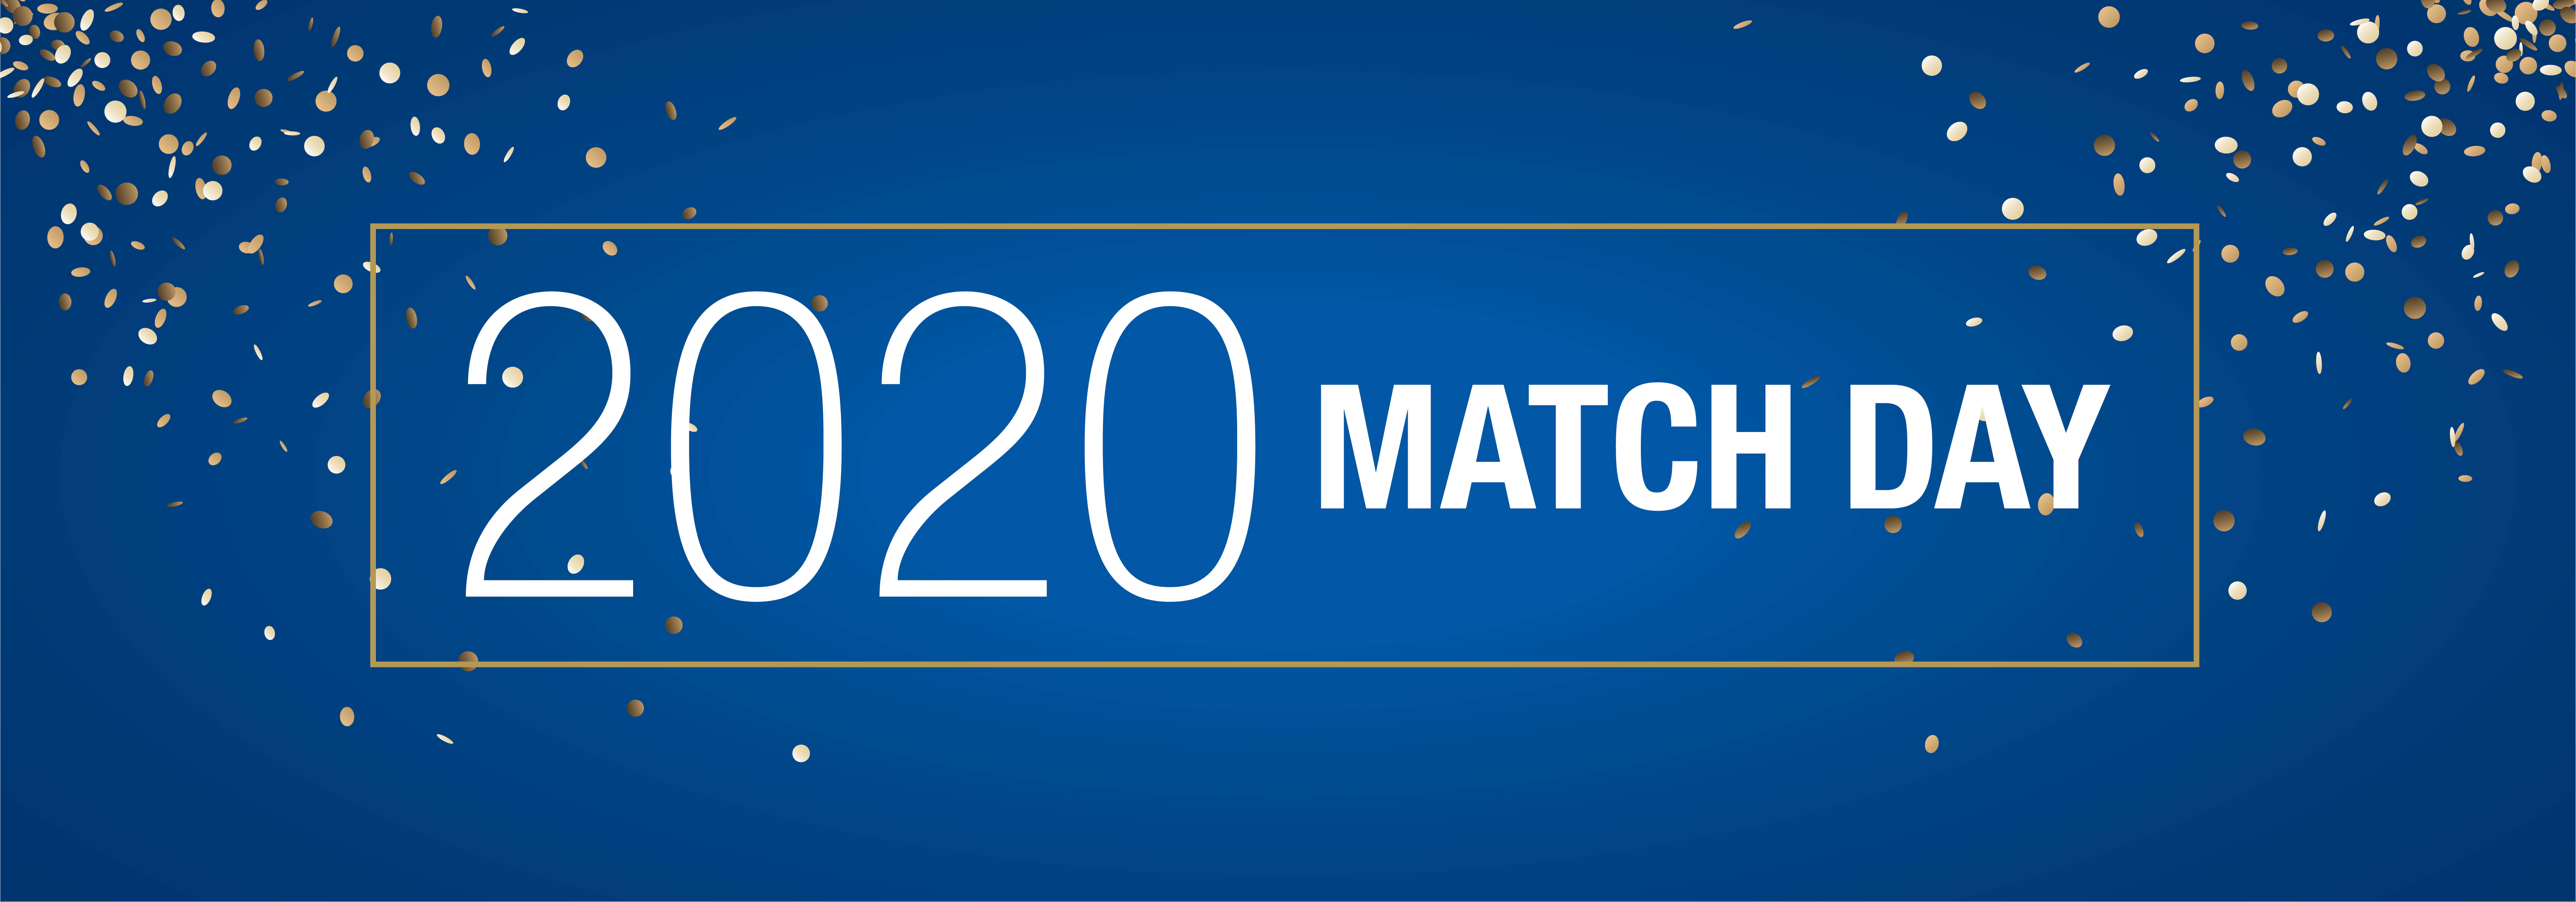 Match Day 2020 - Header 2